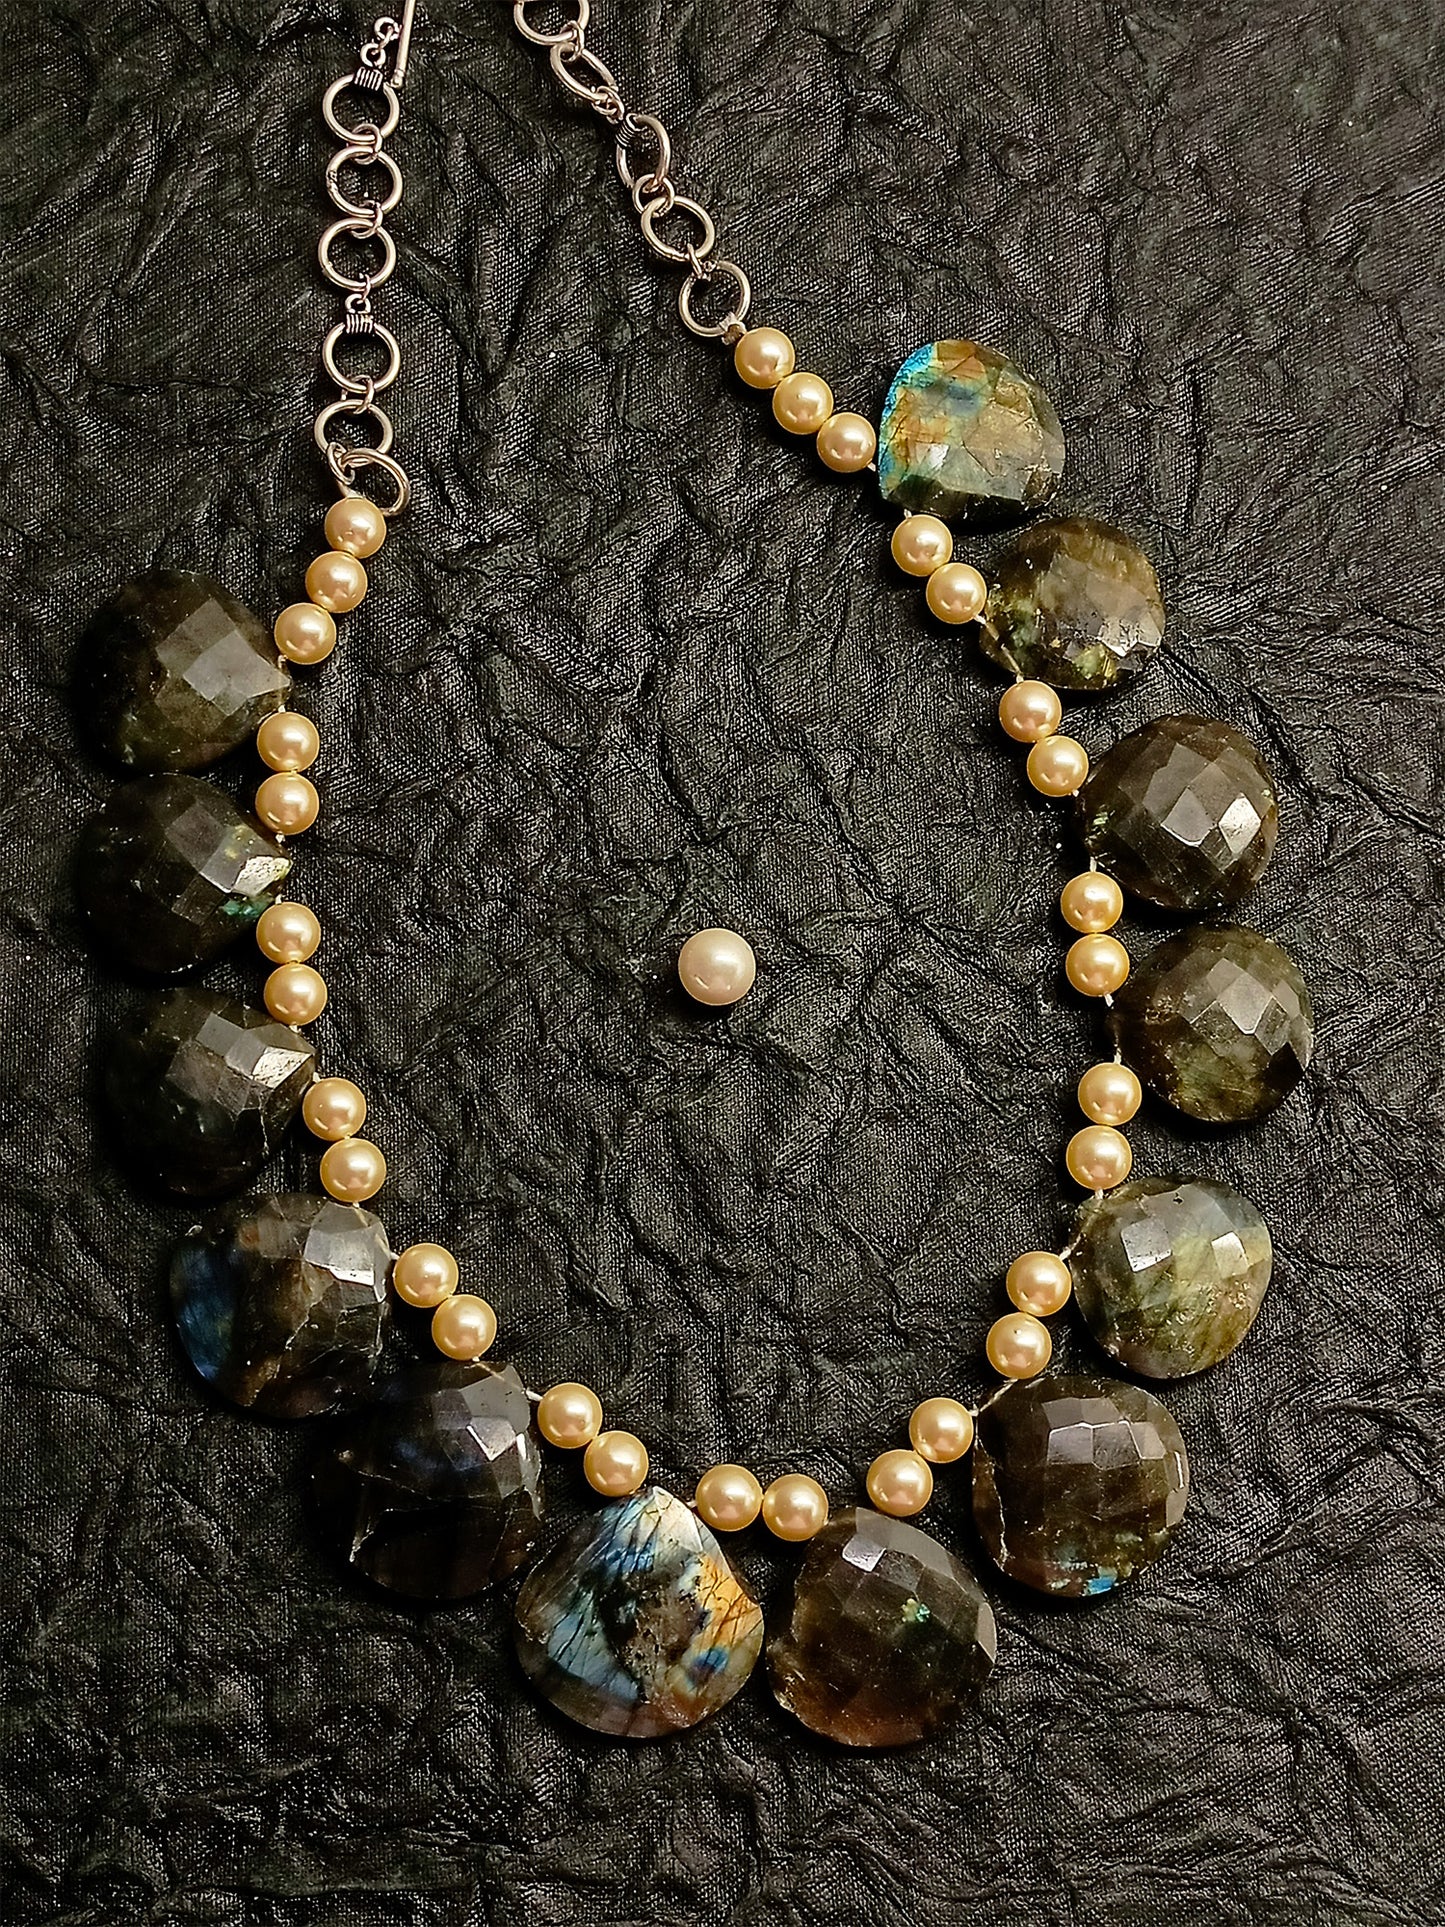 Kim Labradorite Natural Stone Necklace